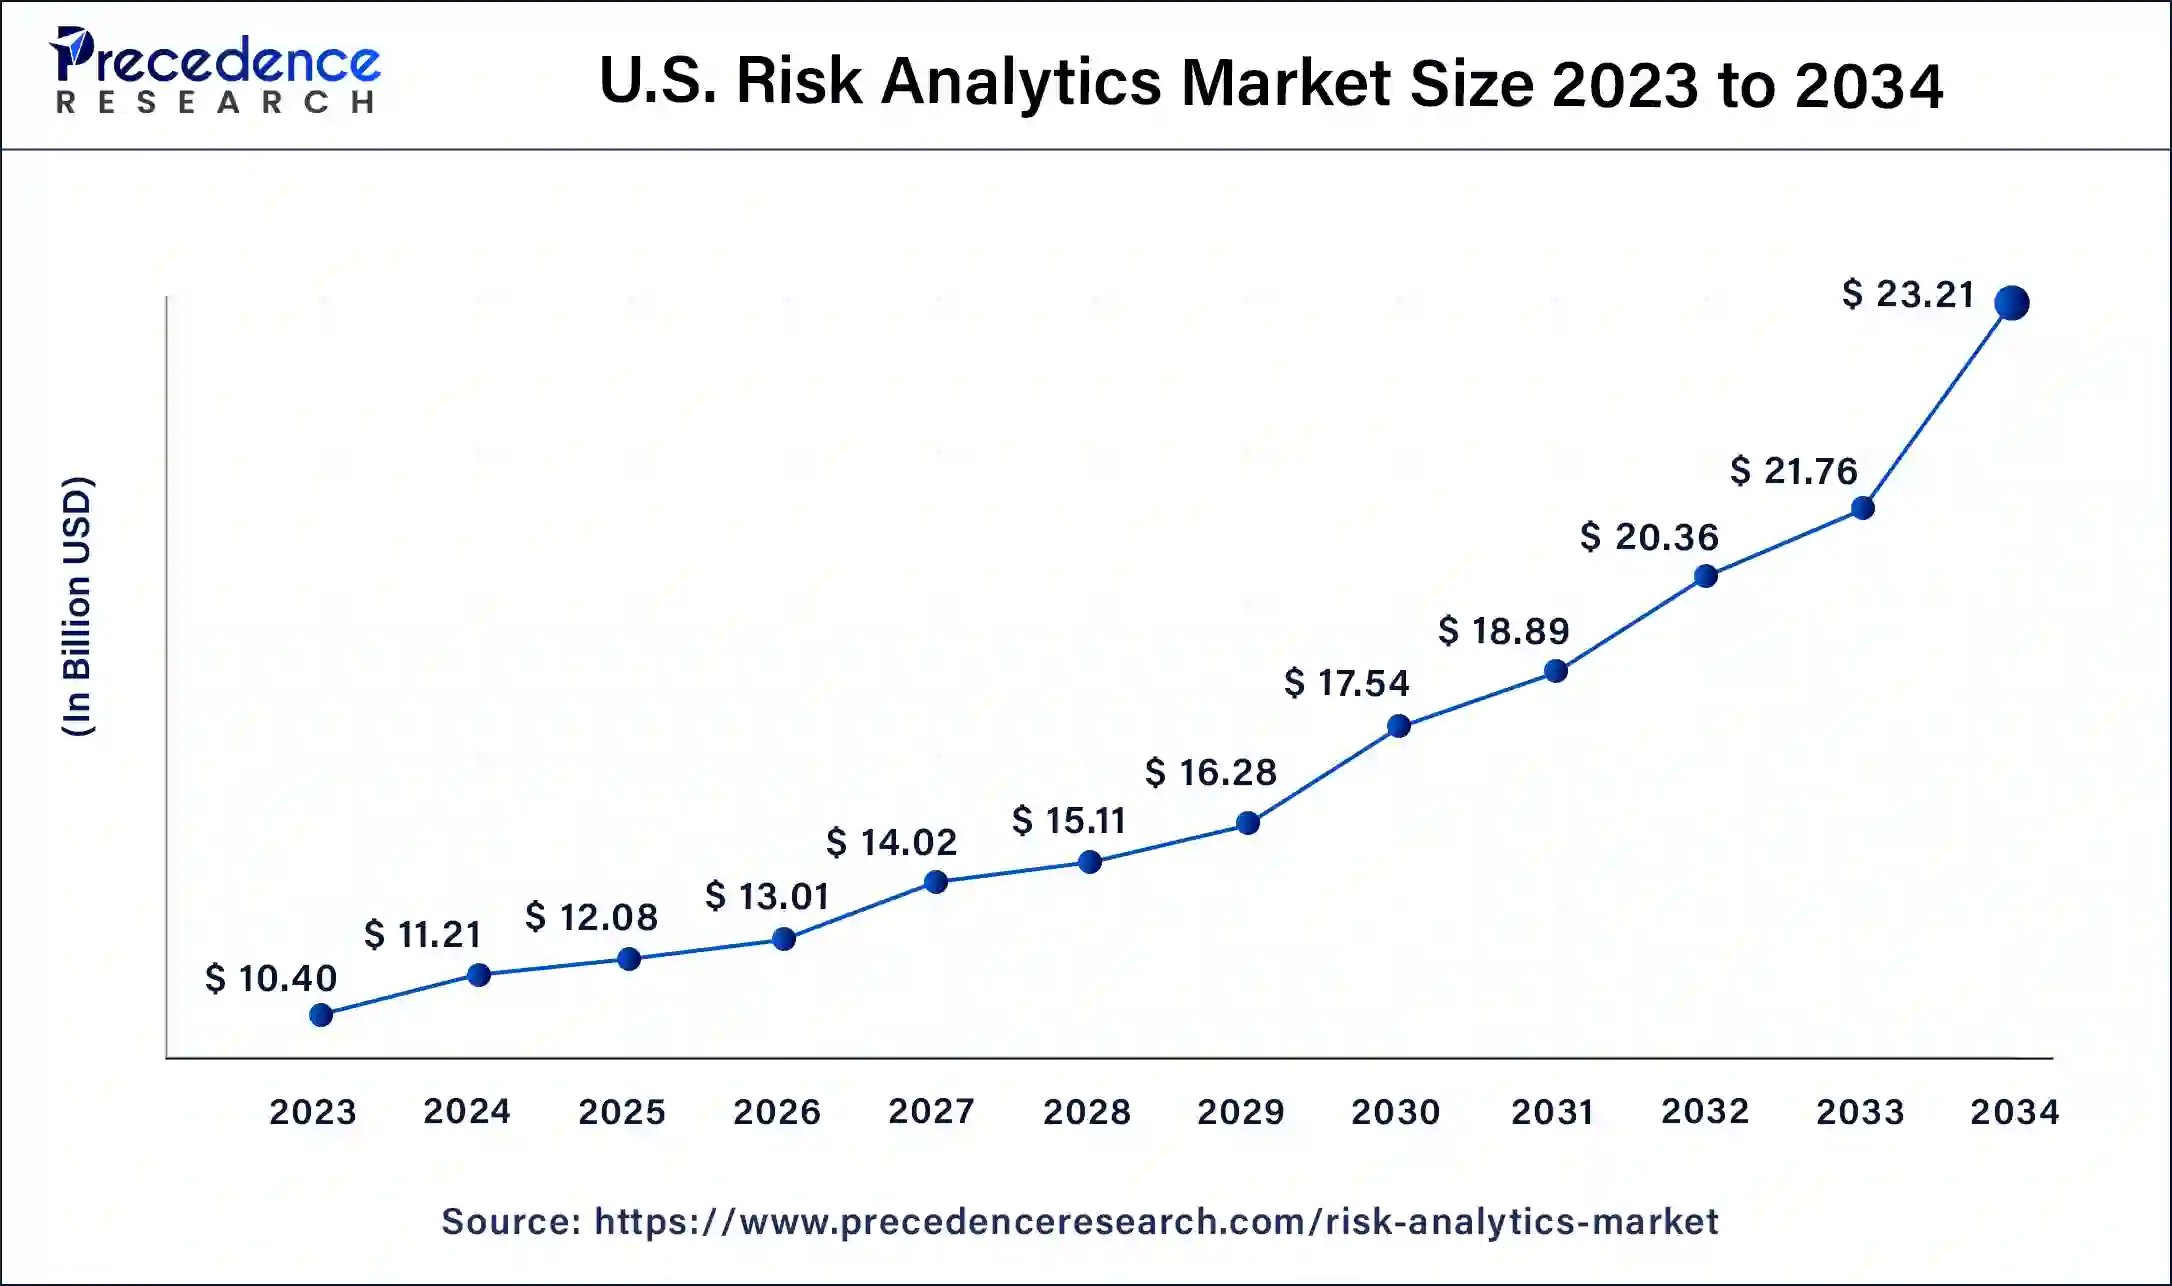 U.S. Risk Analytics Market Size 2024 To 2034